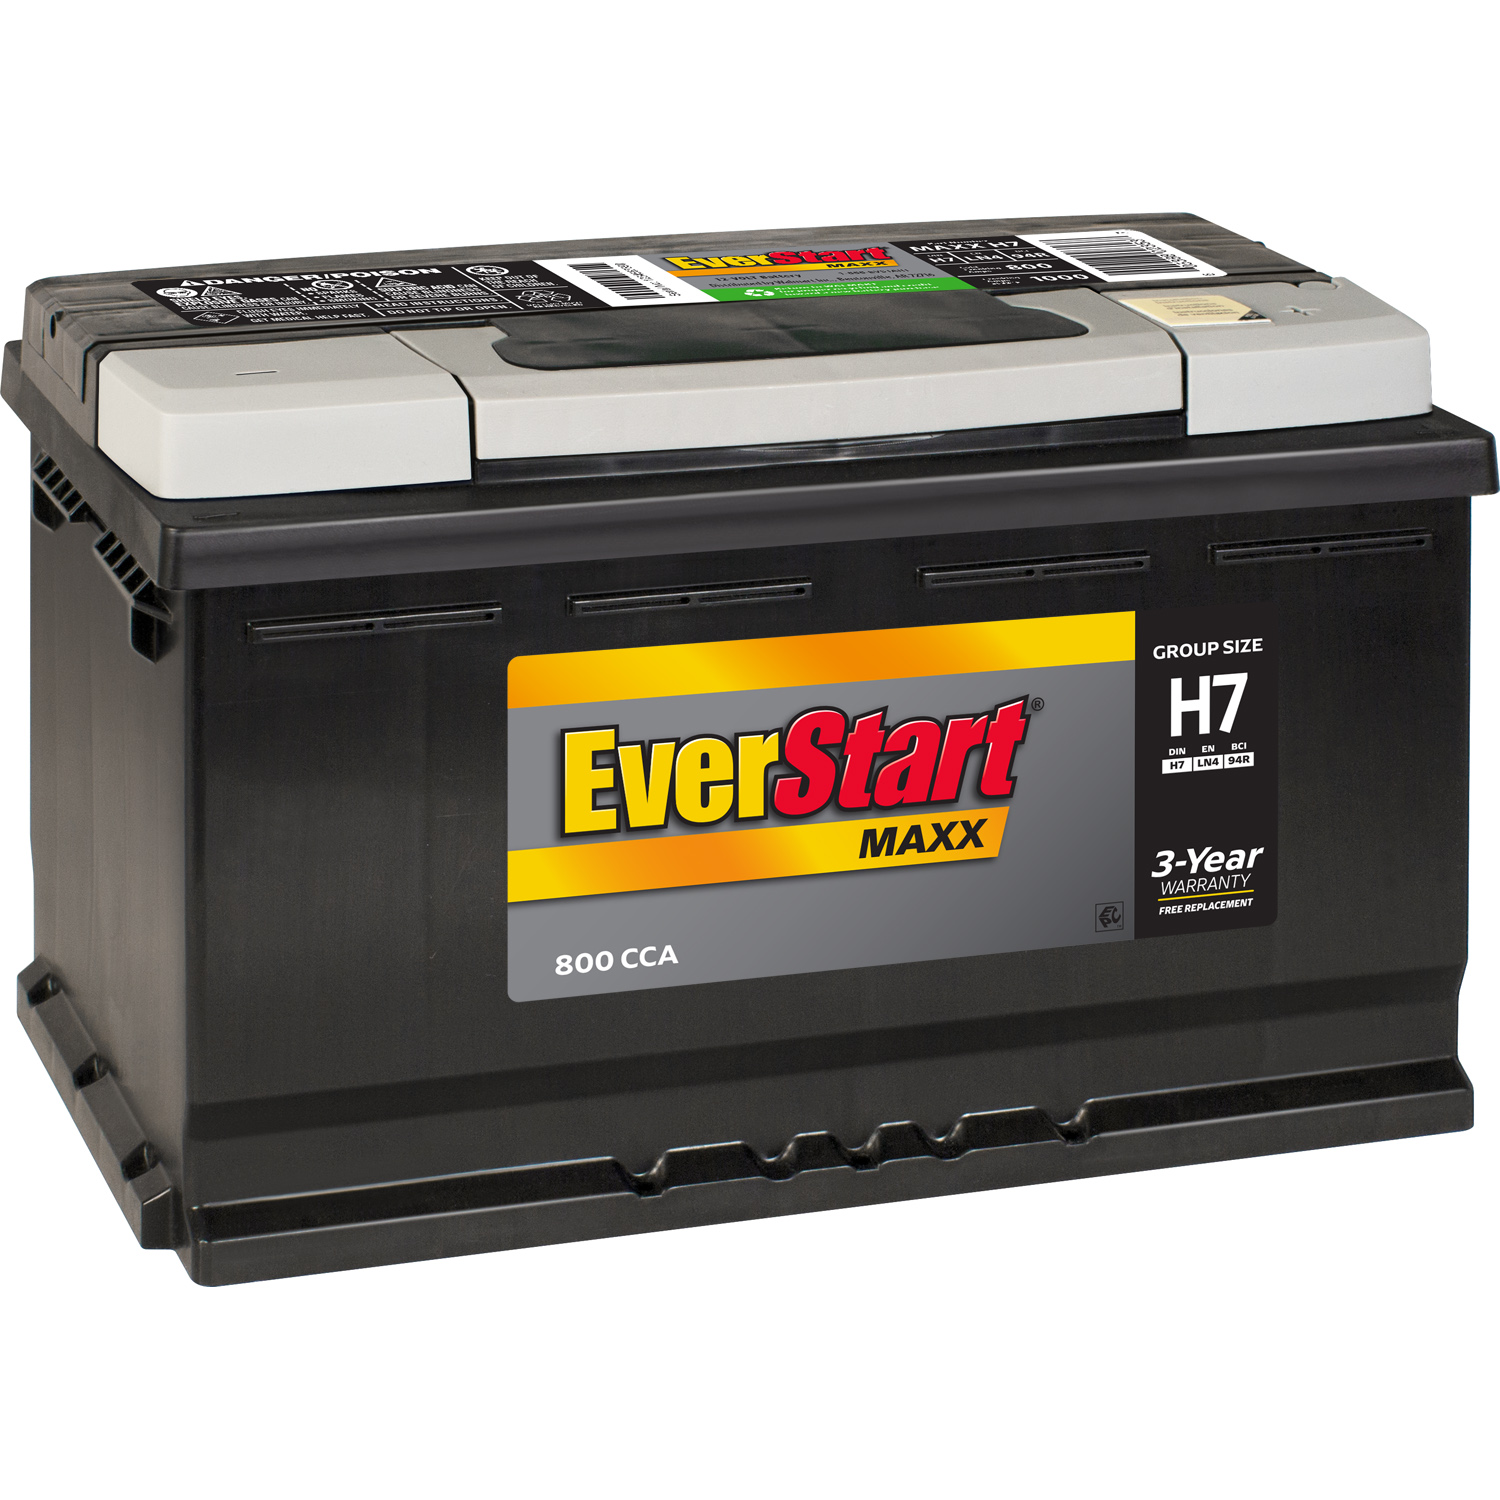 EverStart Maxx Lead Acid Automotive Battery, Group Size H7 / LN4 / 94R 12 Volt, 800 CCA - image 1 of 7